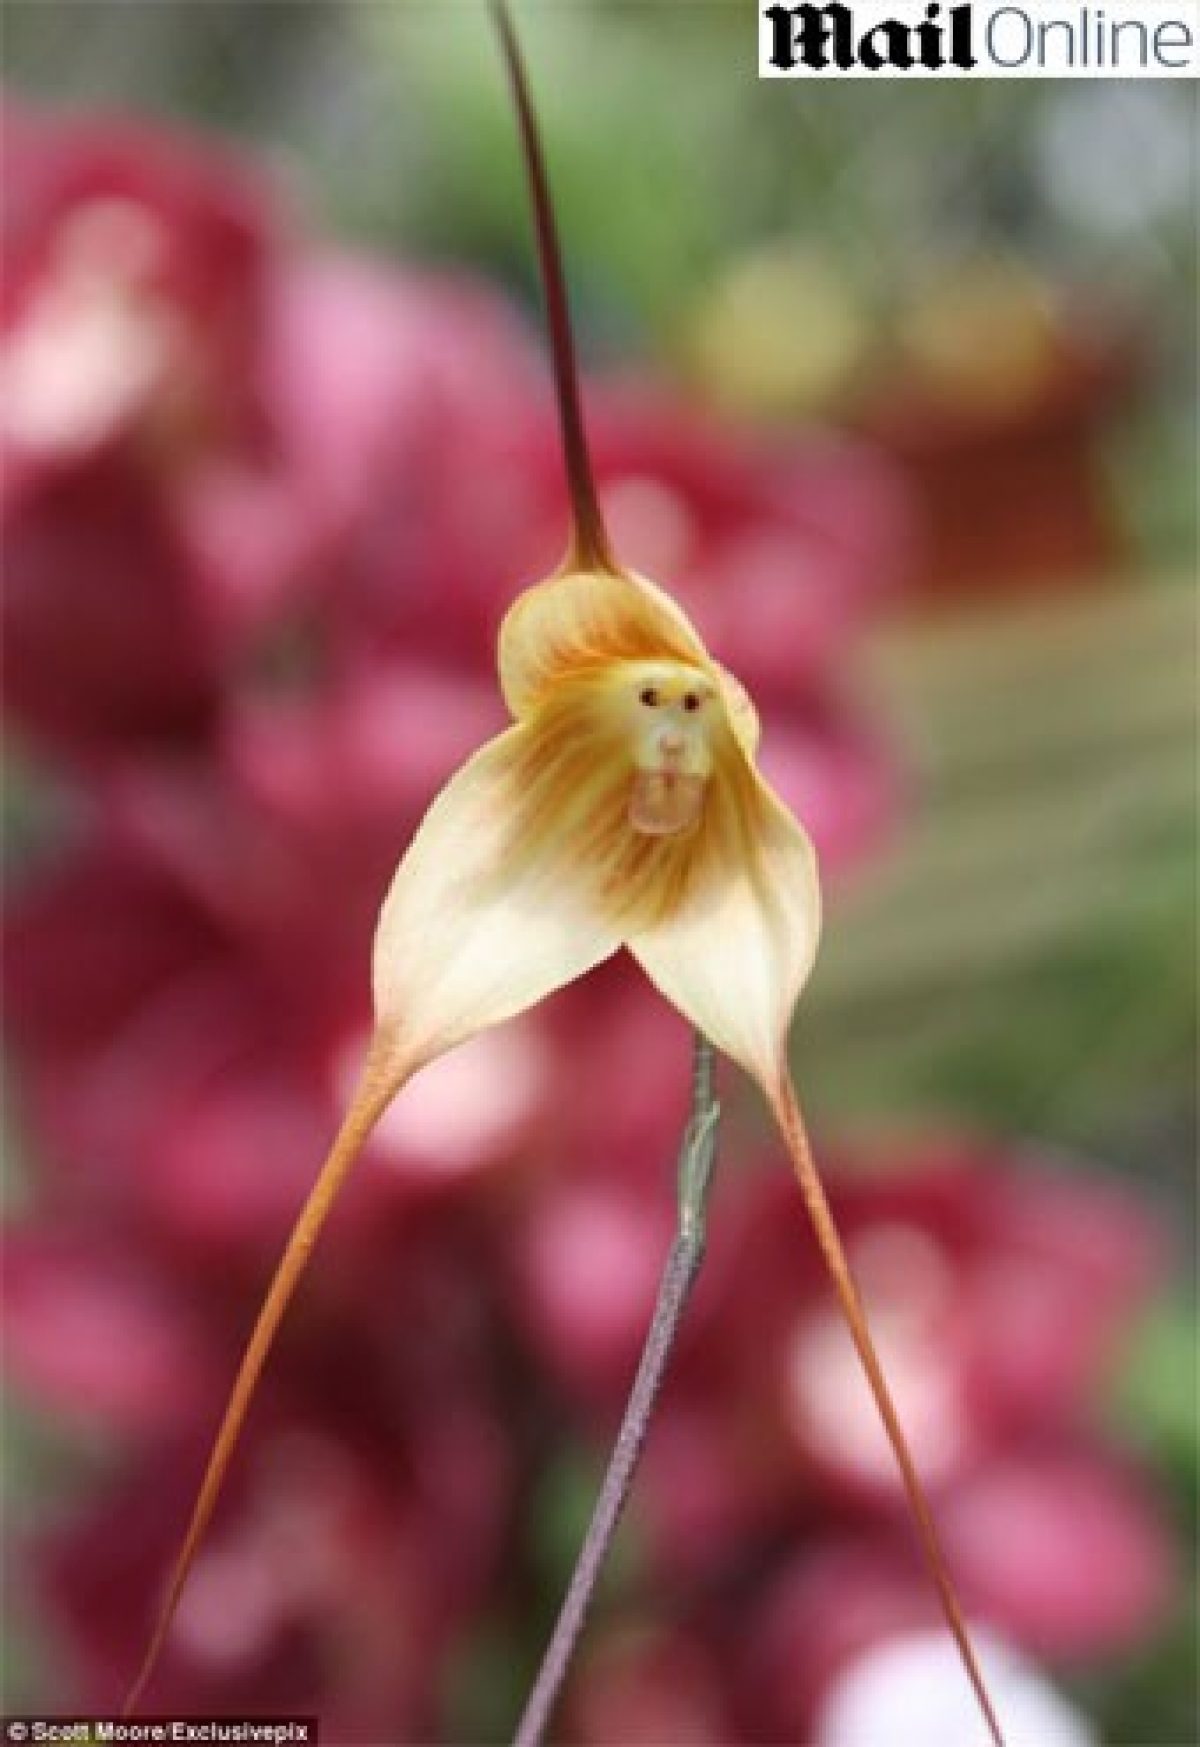 Orquídea rara tem “cara de macaco” – Vírgula